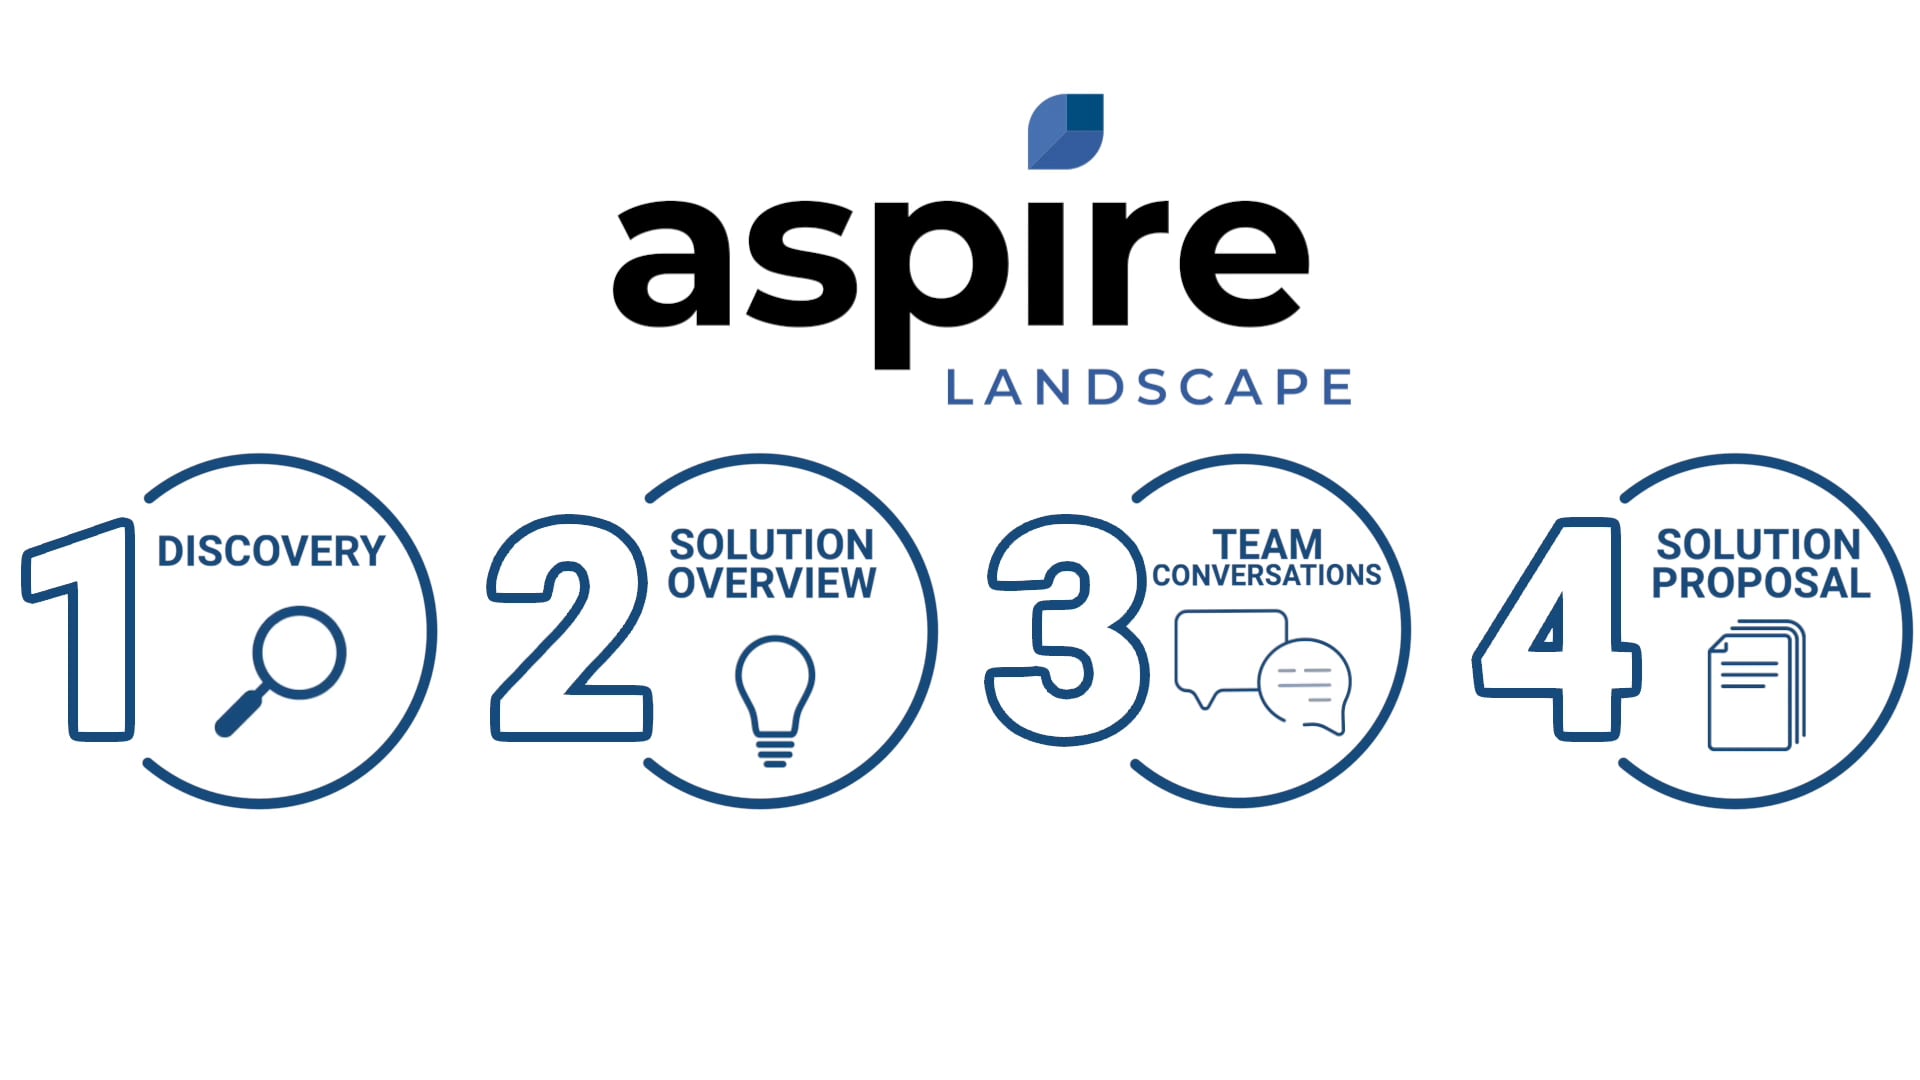 Aspire Software's Sales Process